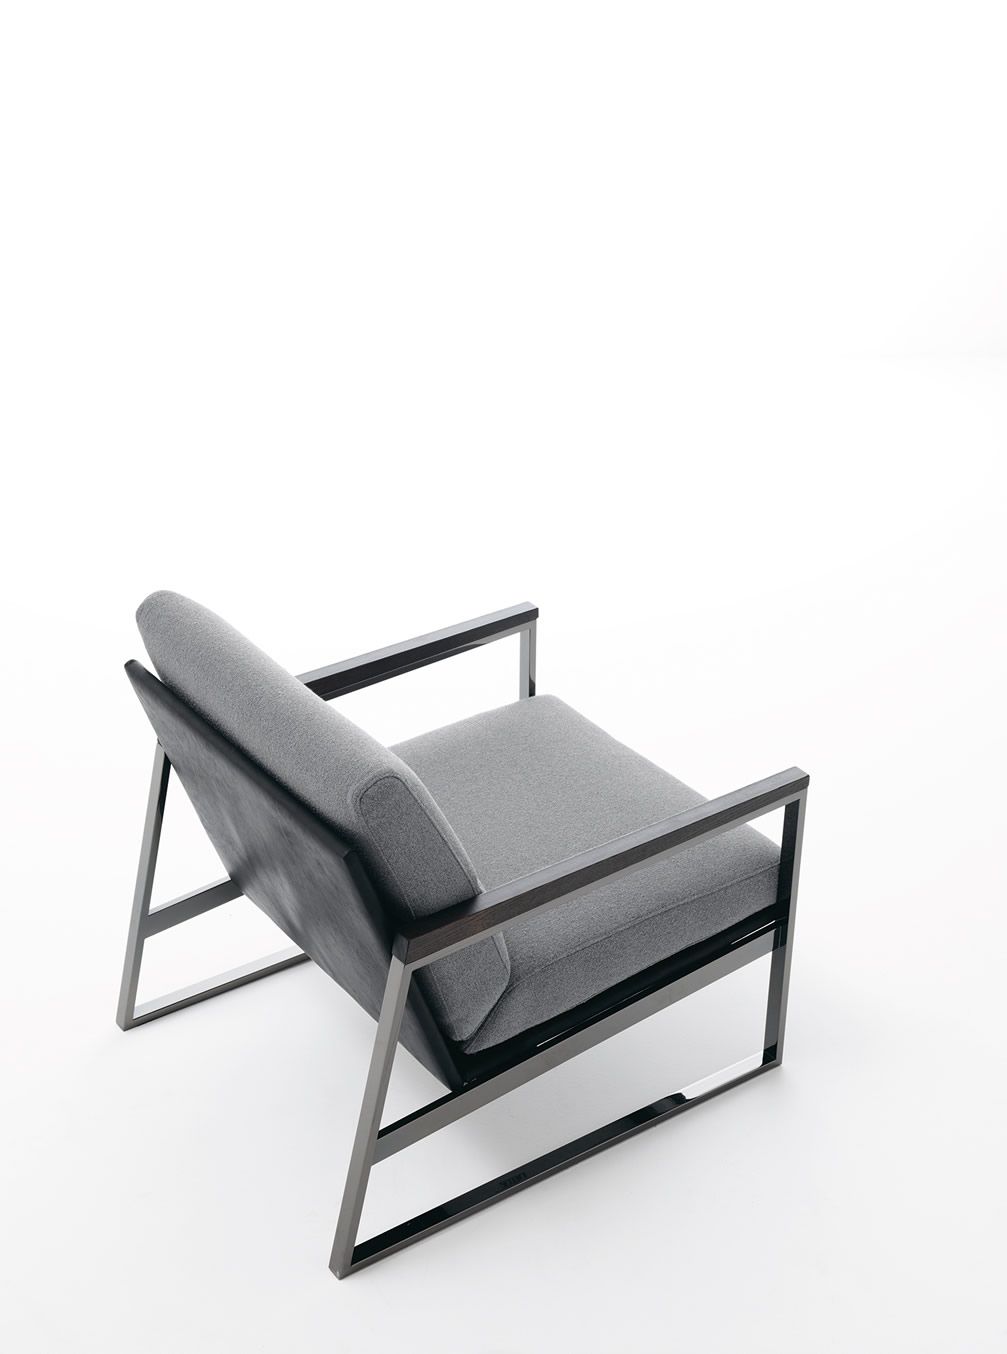 Daytona chair by Ditre Italia